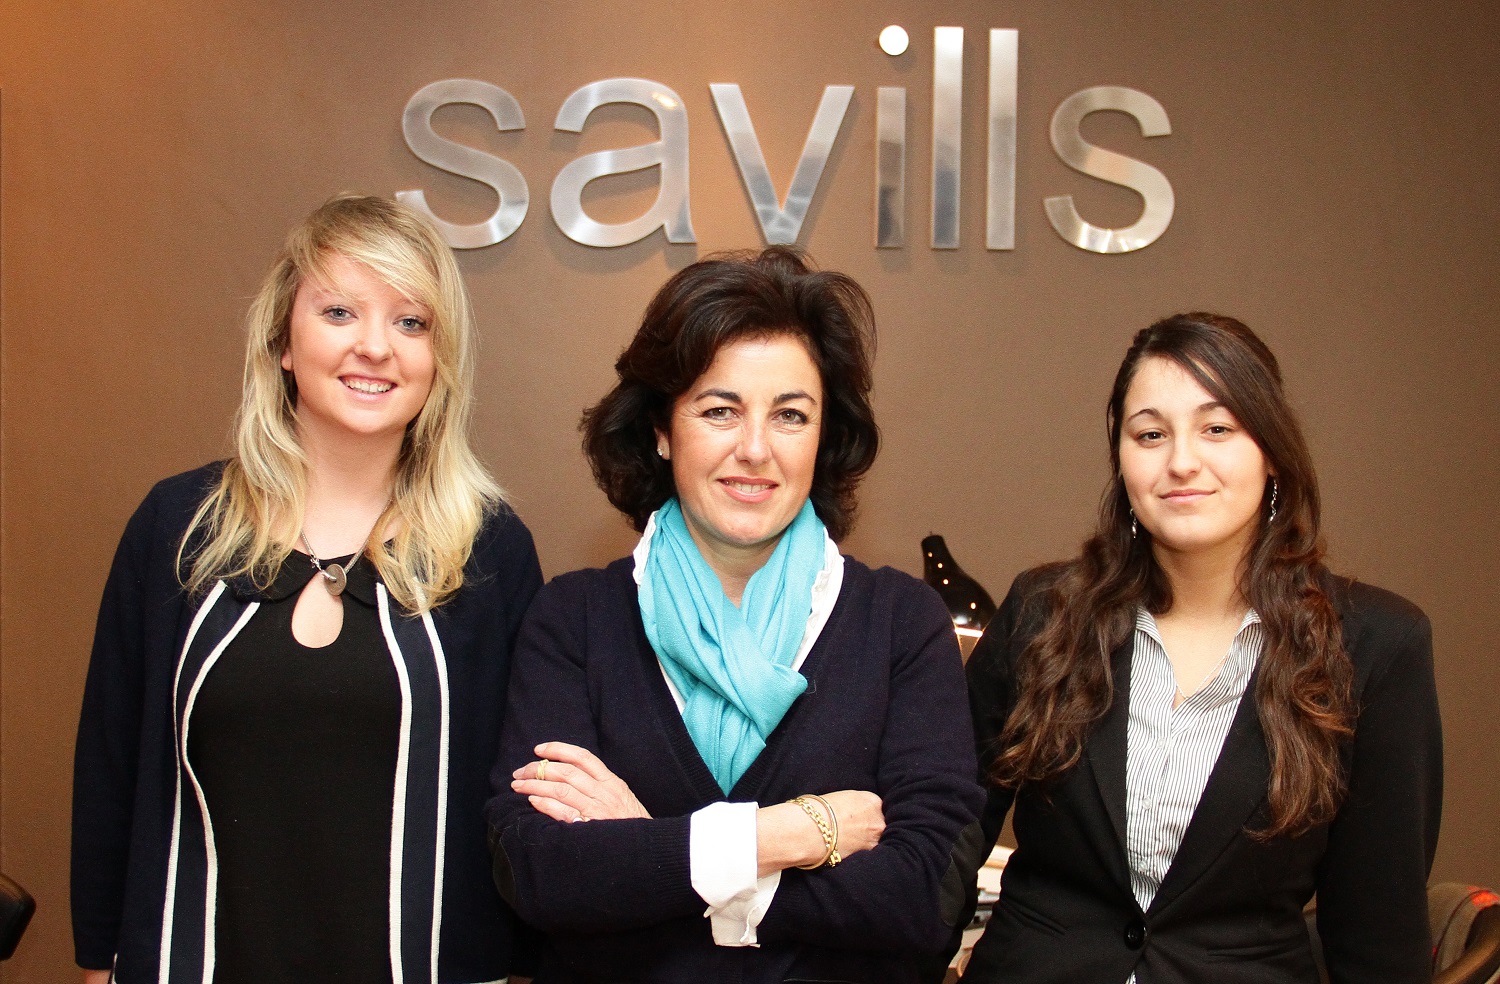 Savills staff